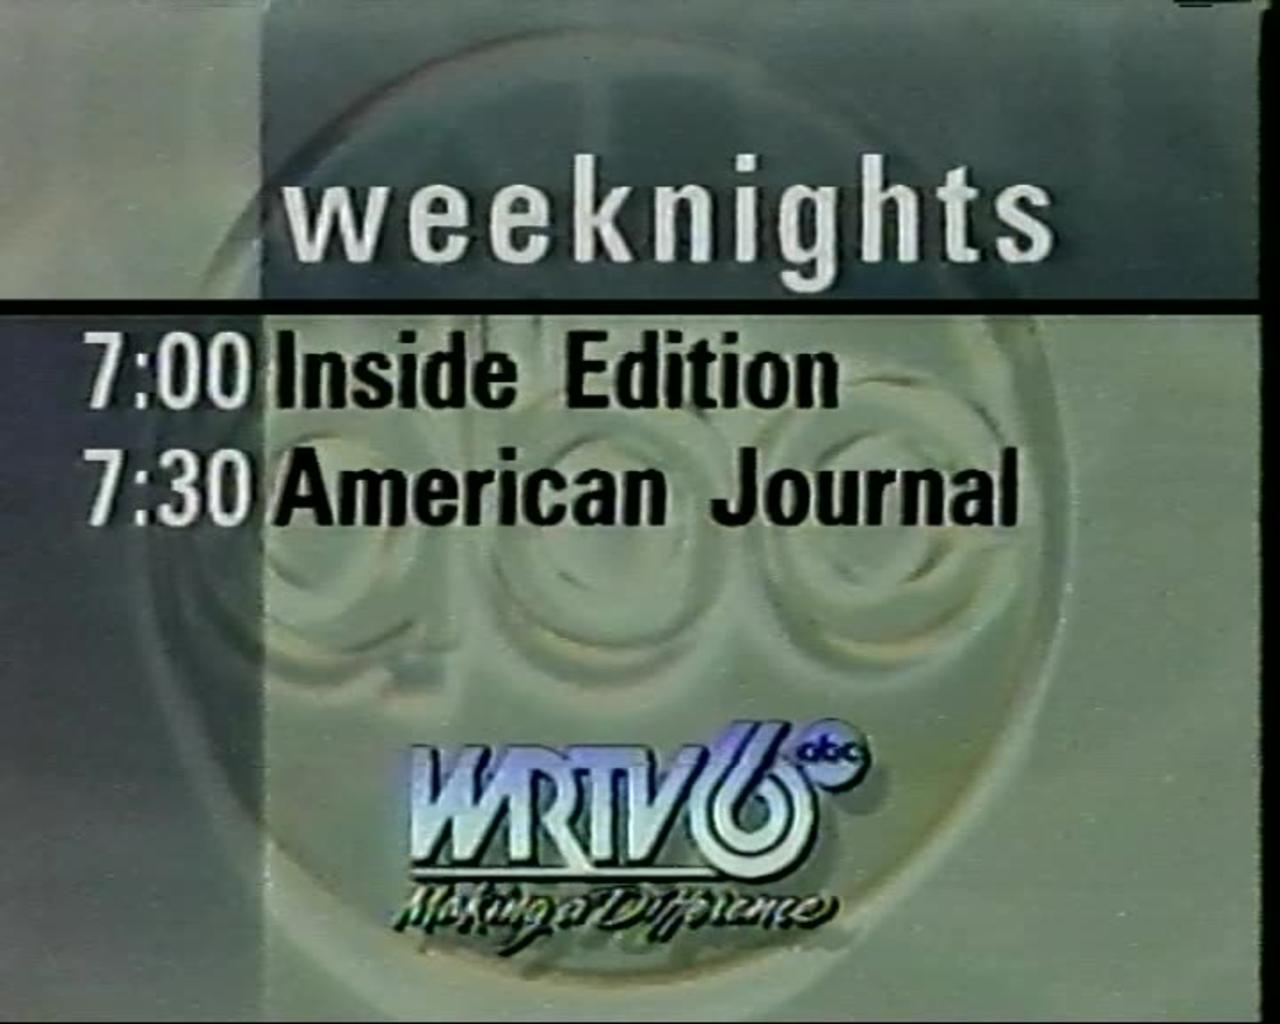 June 7, 1996 - WRTV Promo for 'Inside Edition' & 'American Journal'.mp4